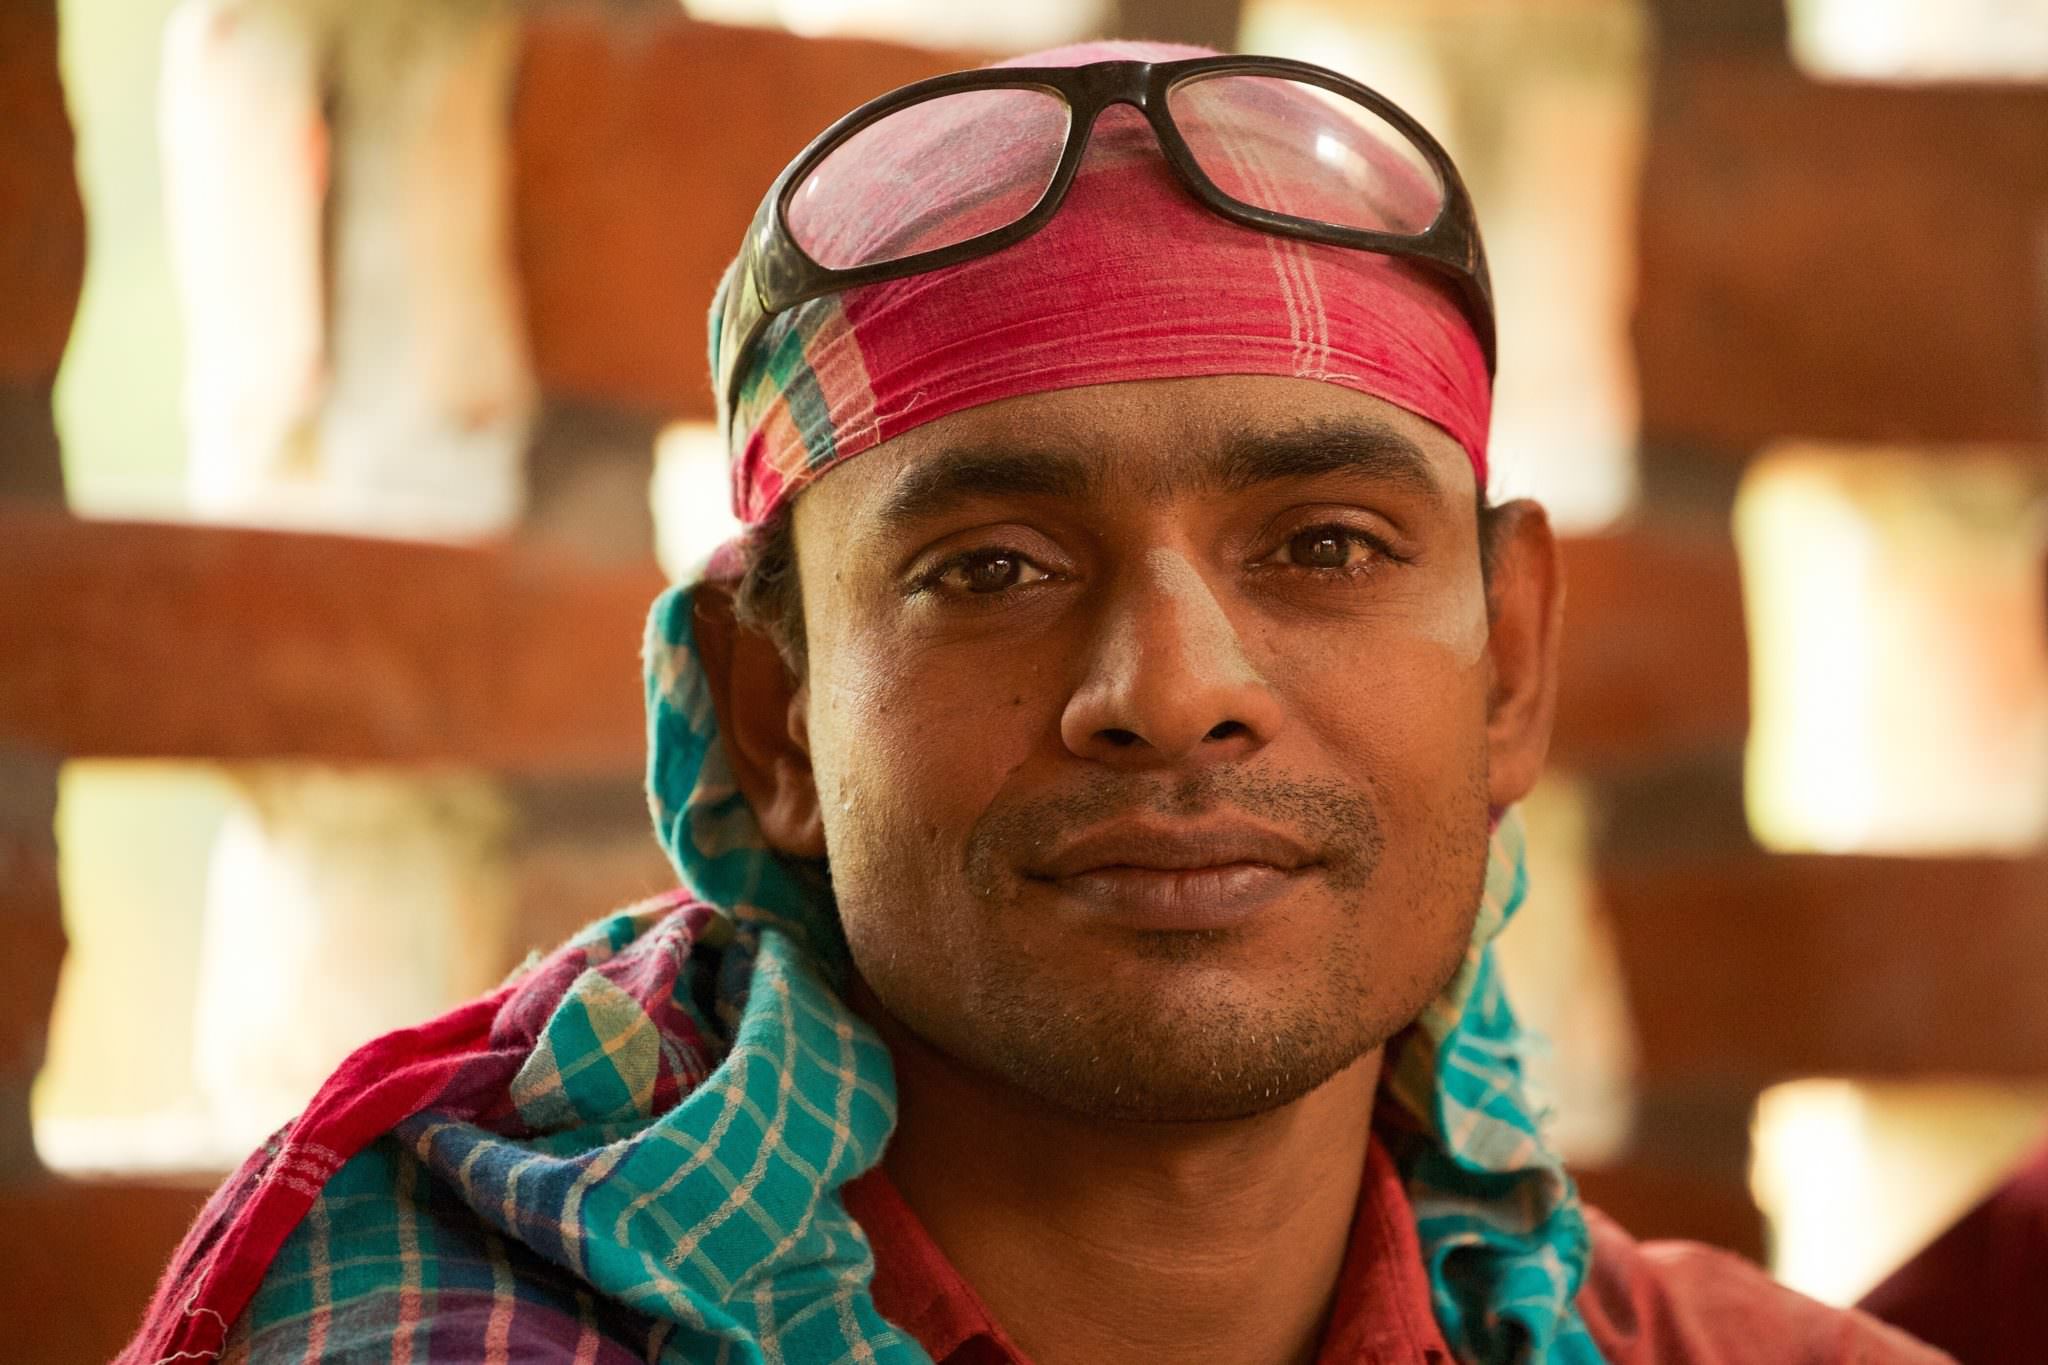 Worker on a construction site Bangladesh November 2015